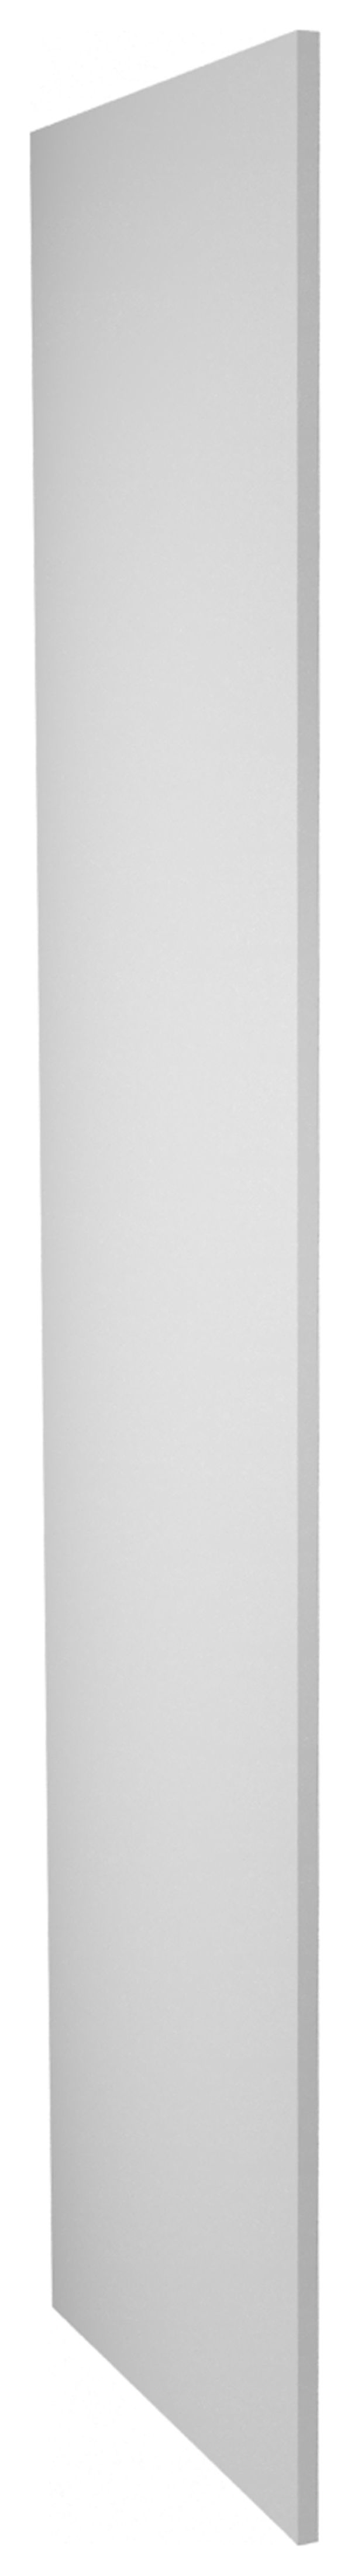 Image of Wickes Ohio Grey Shaker Decor Tall Panel - 18mm